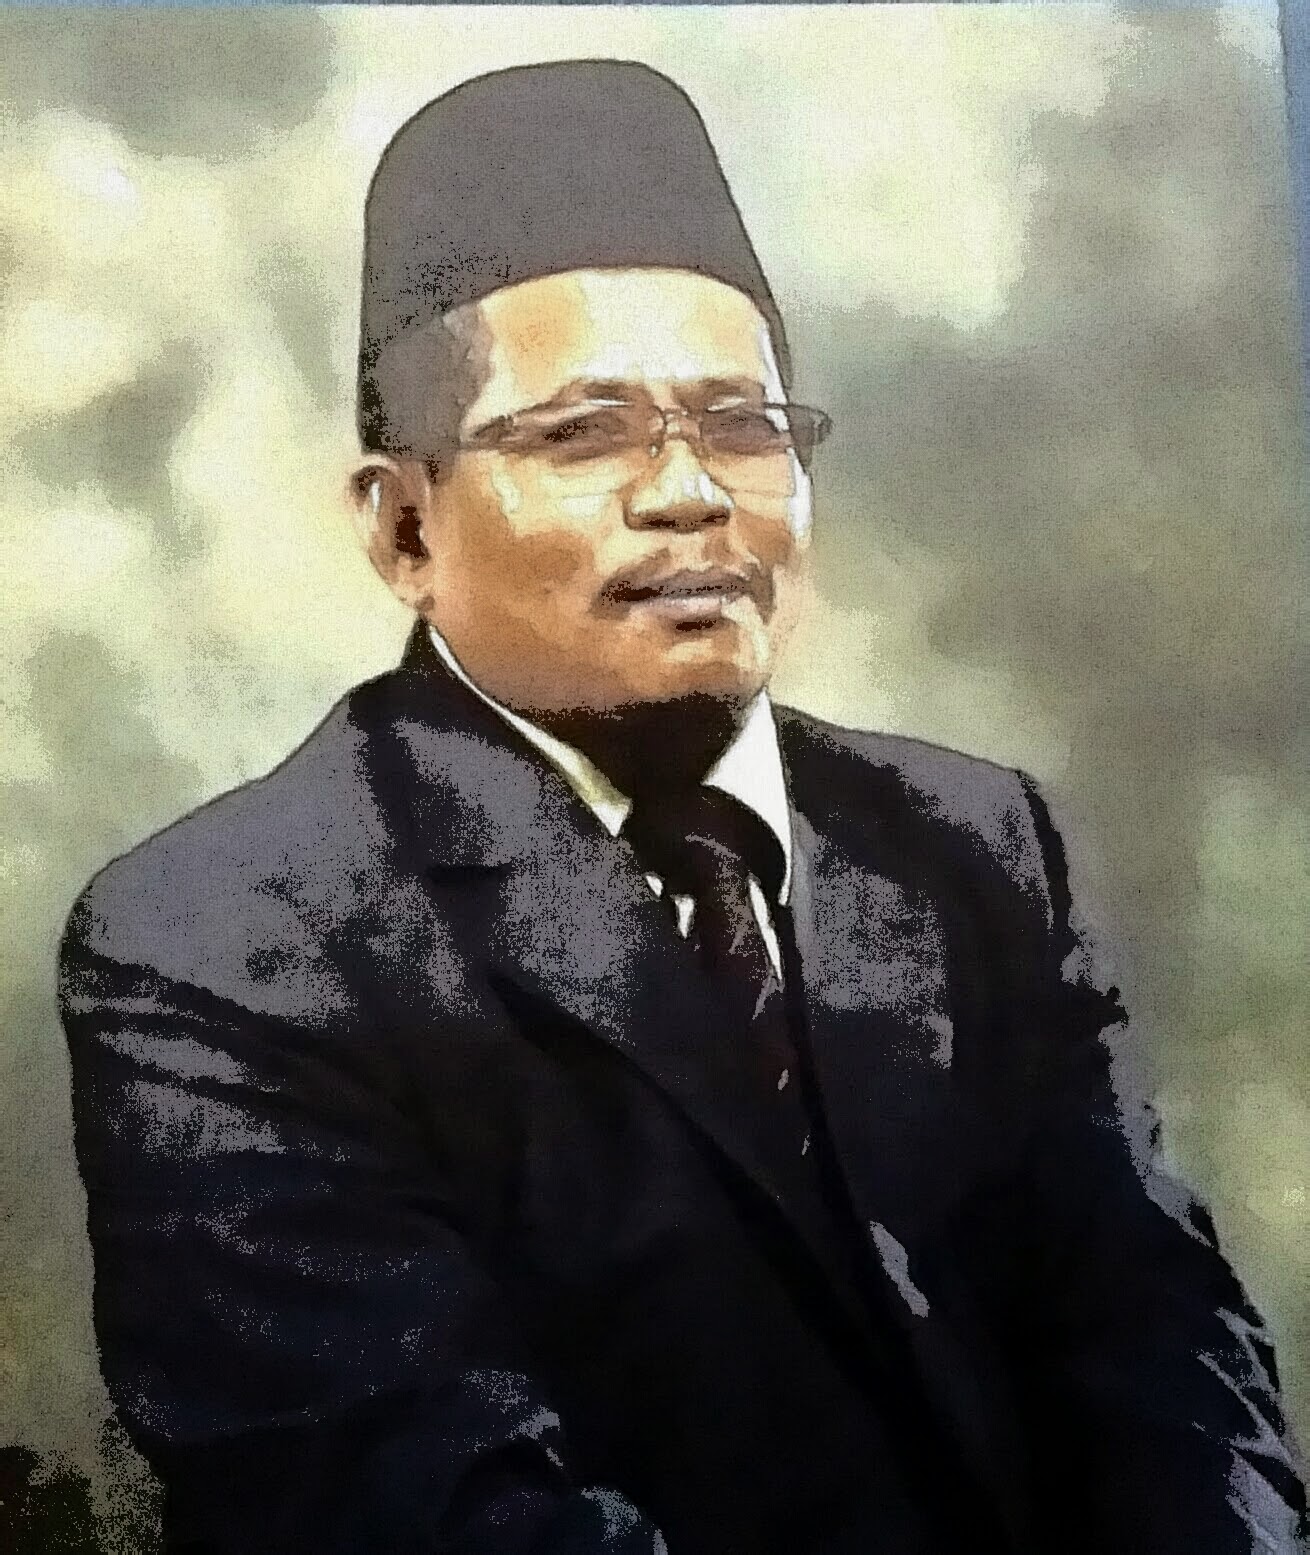 Dato' Hj Noh b. Dahaya